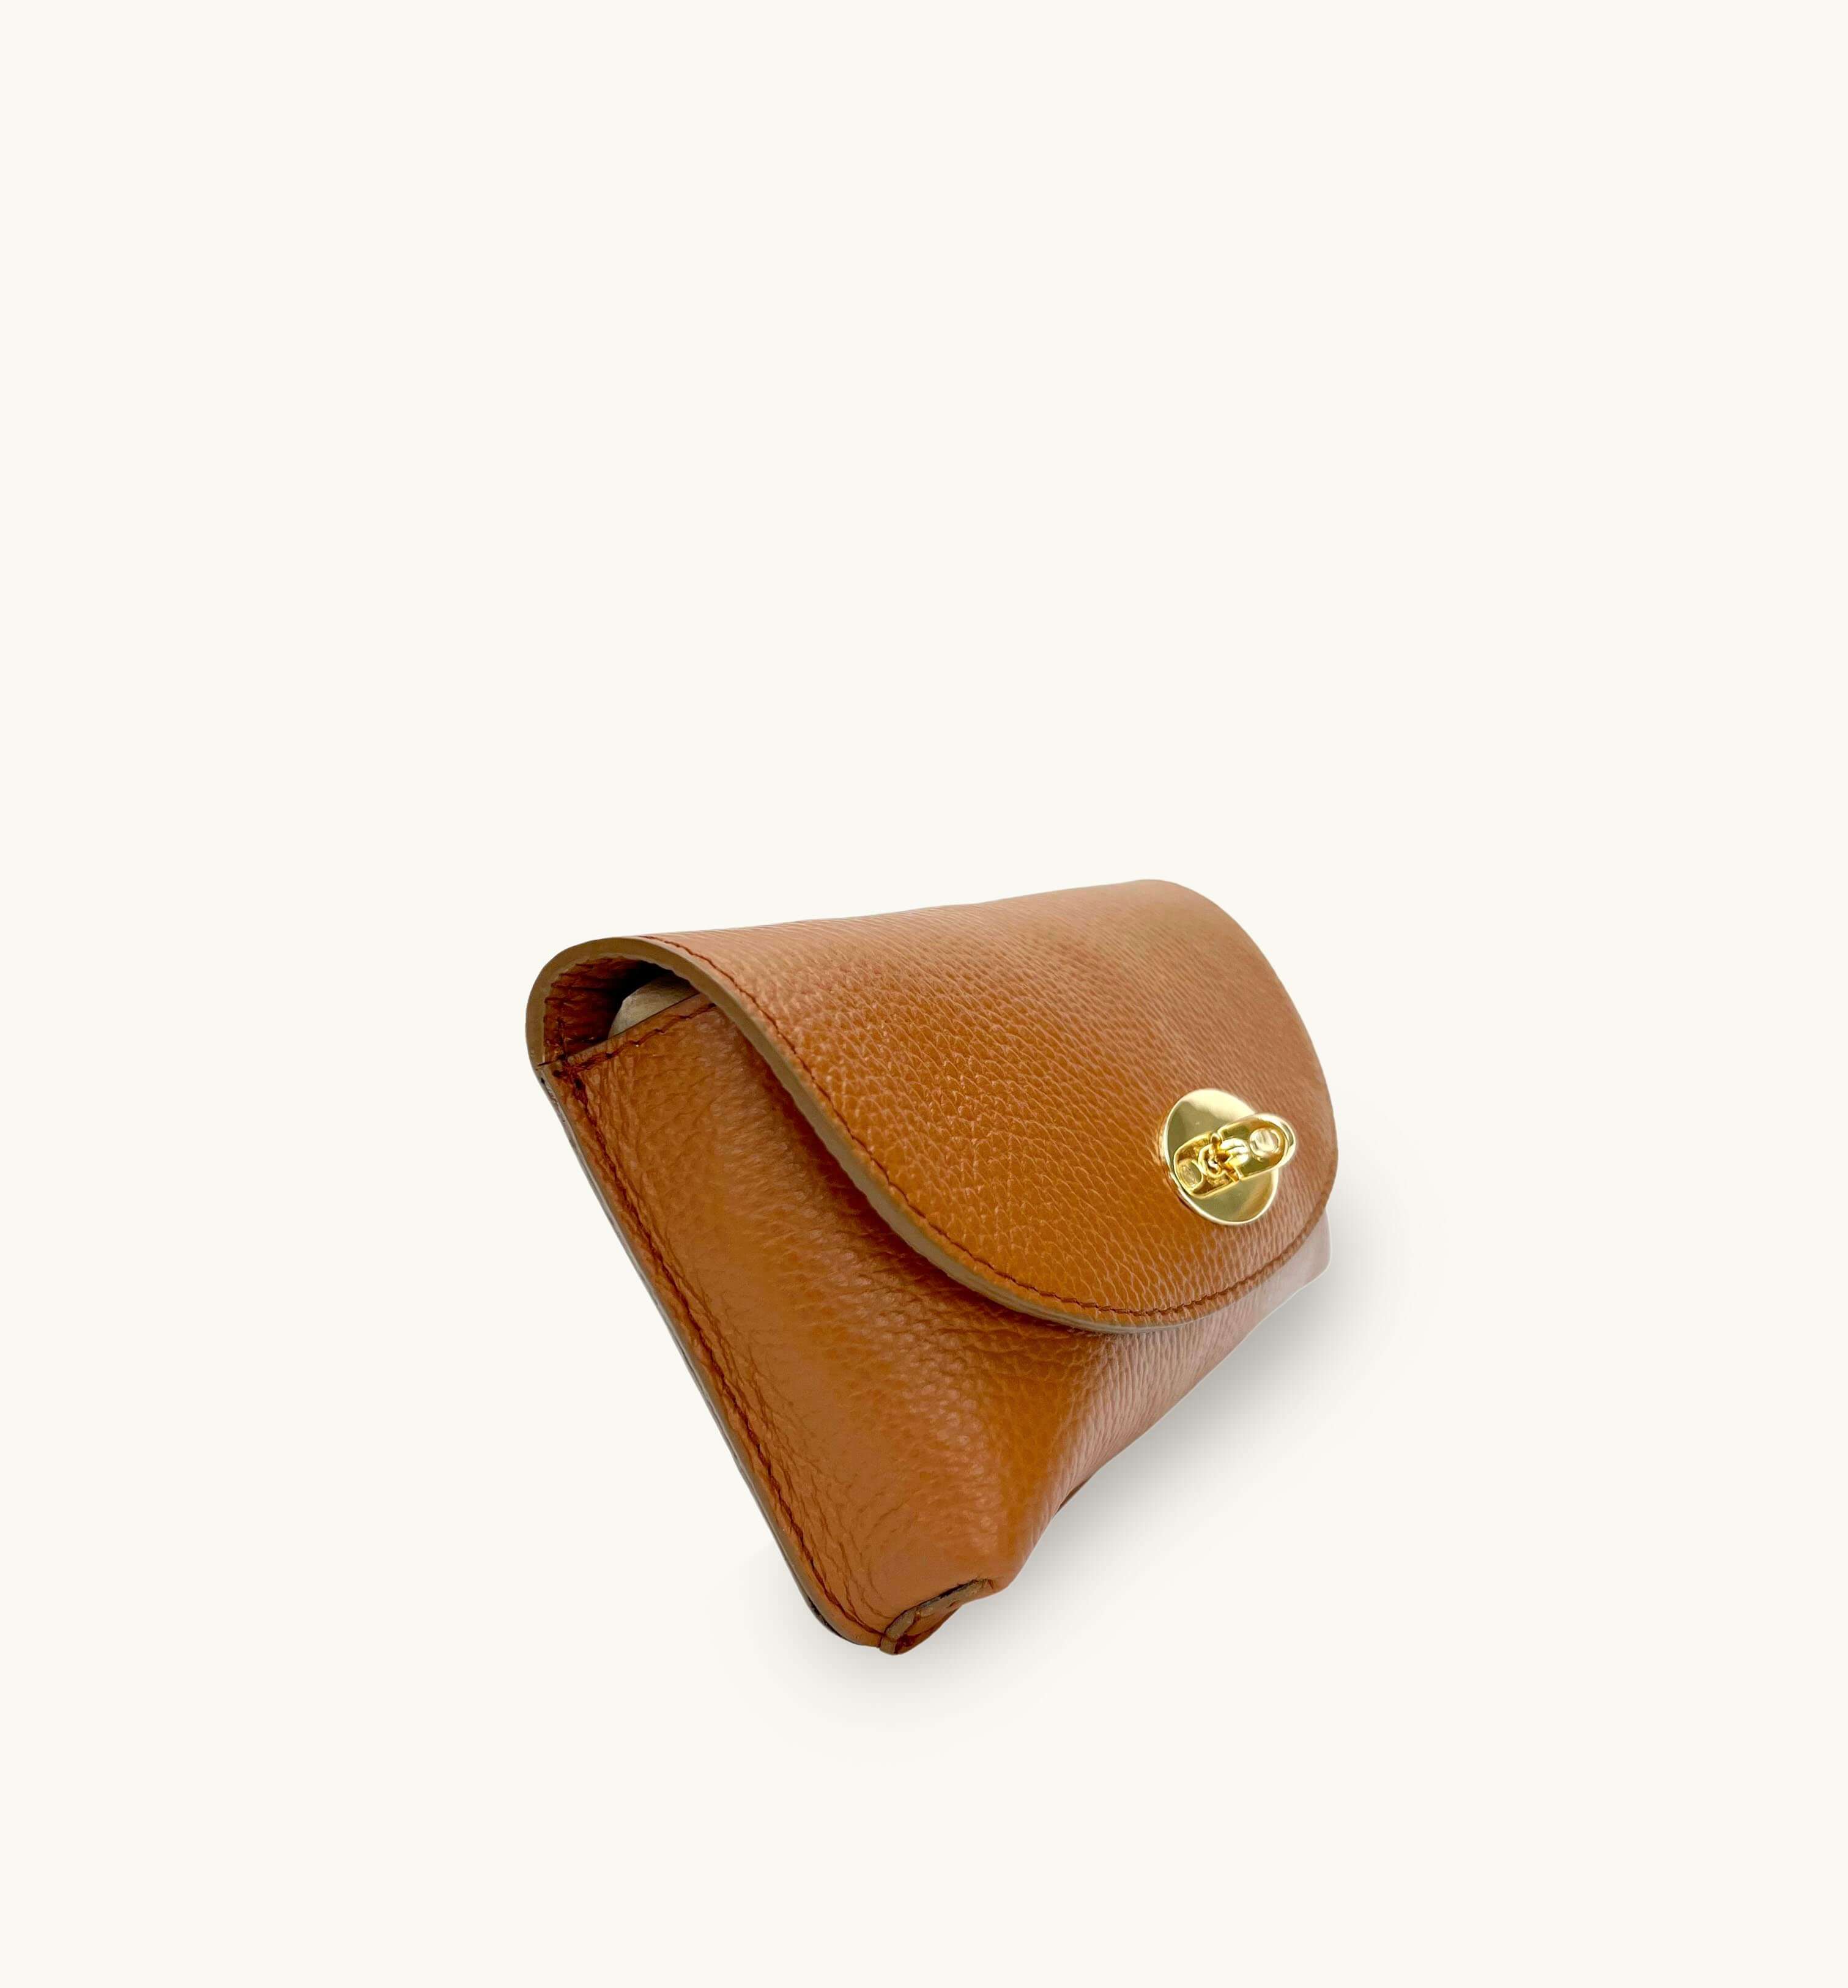 The Mila Tan Leather Phone Bag